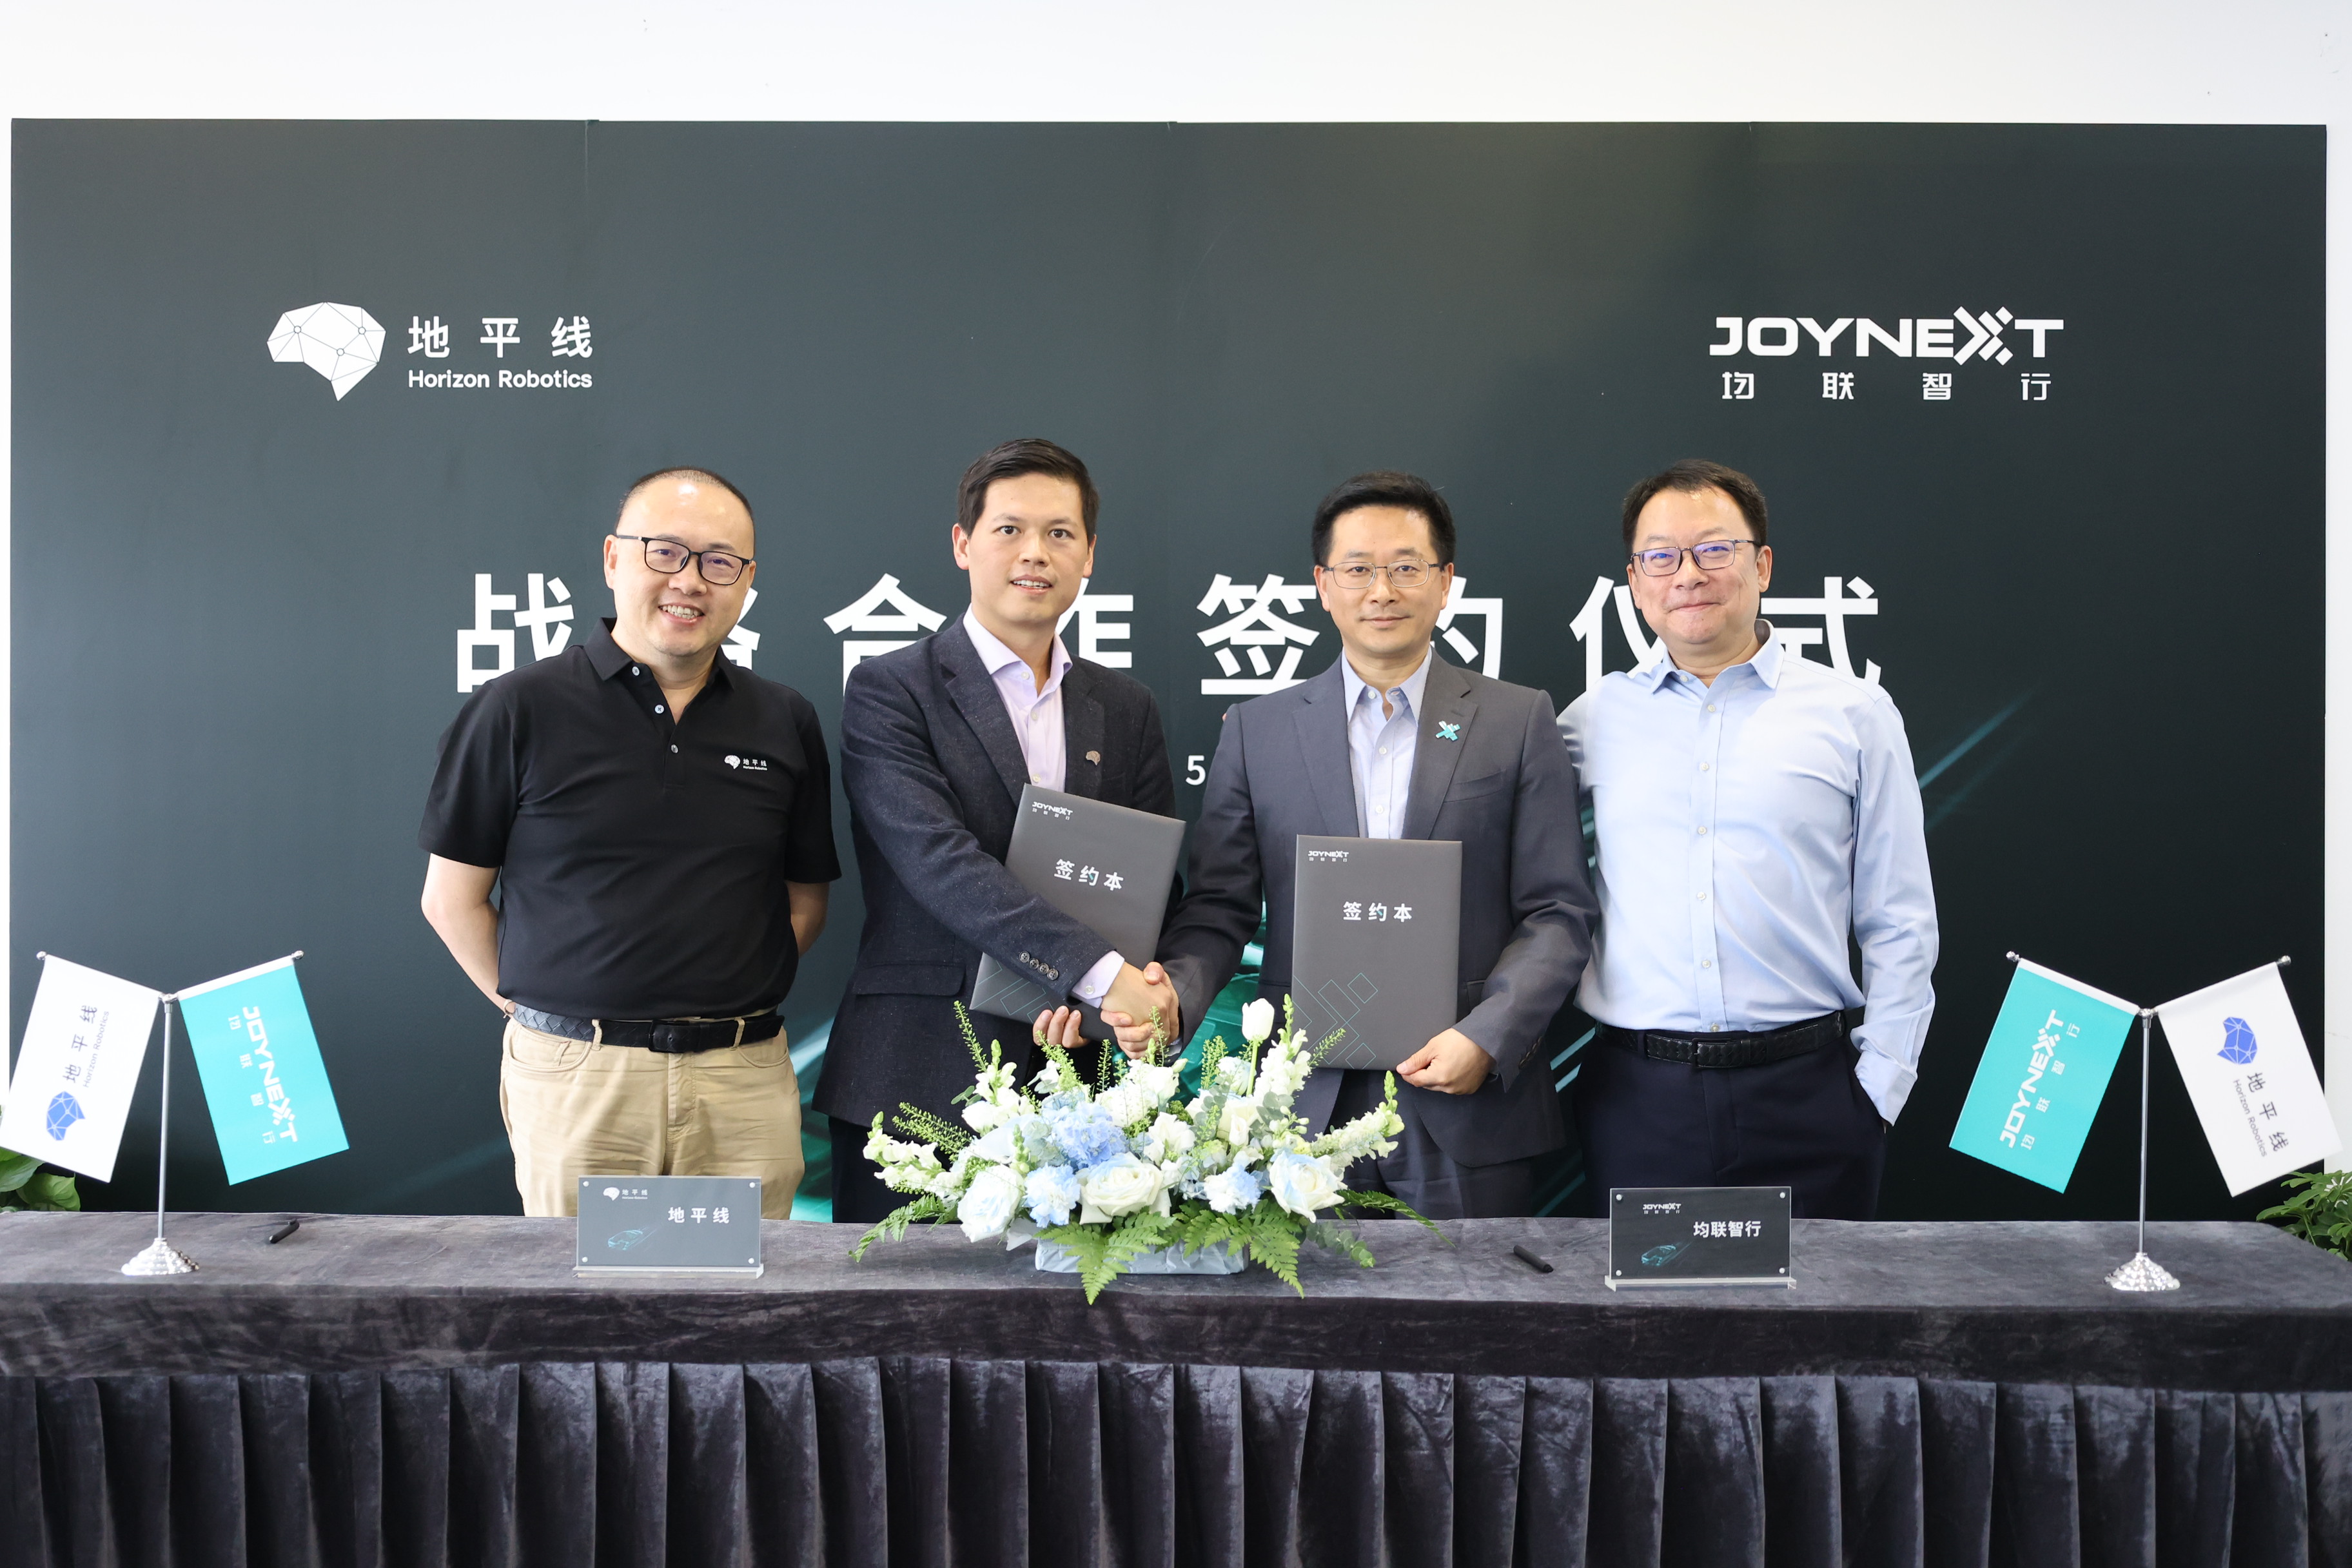 JOYNEXT and Horizon Robotics tie up to develop and implement autonomous driving solutions